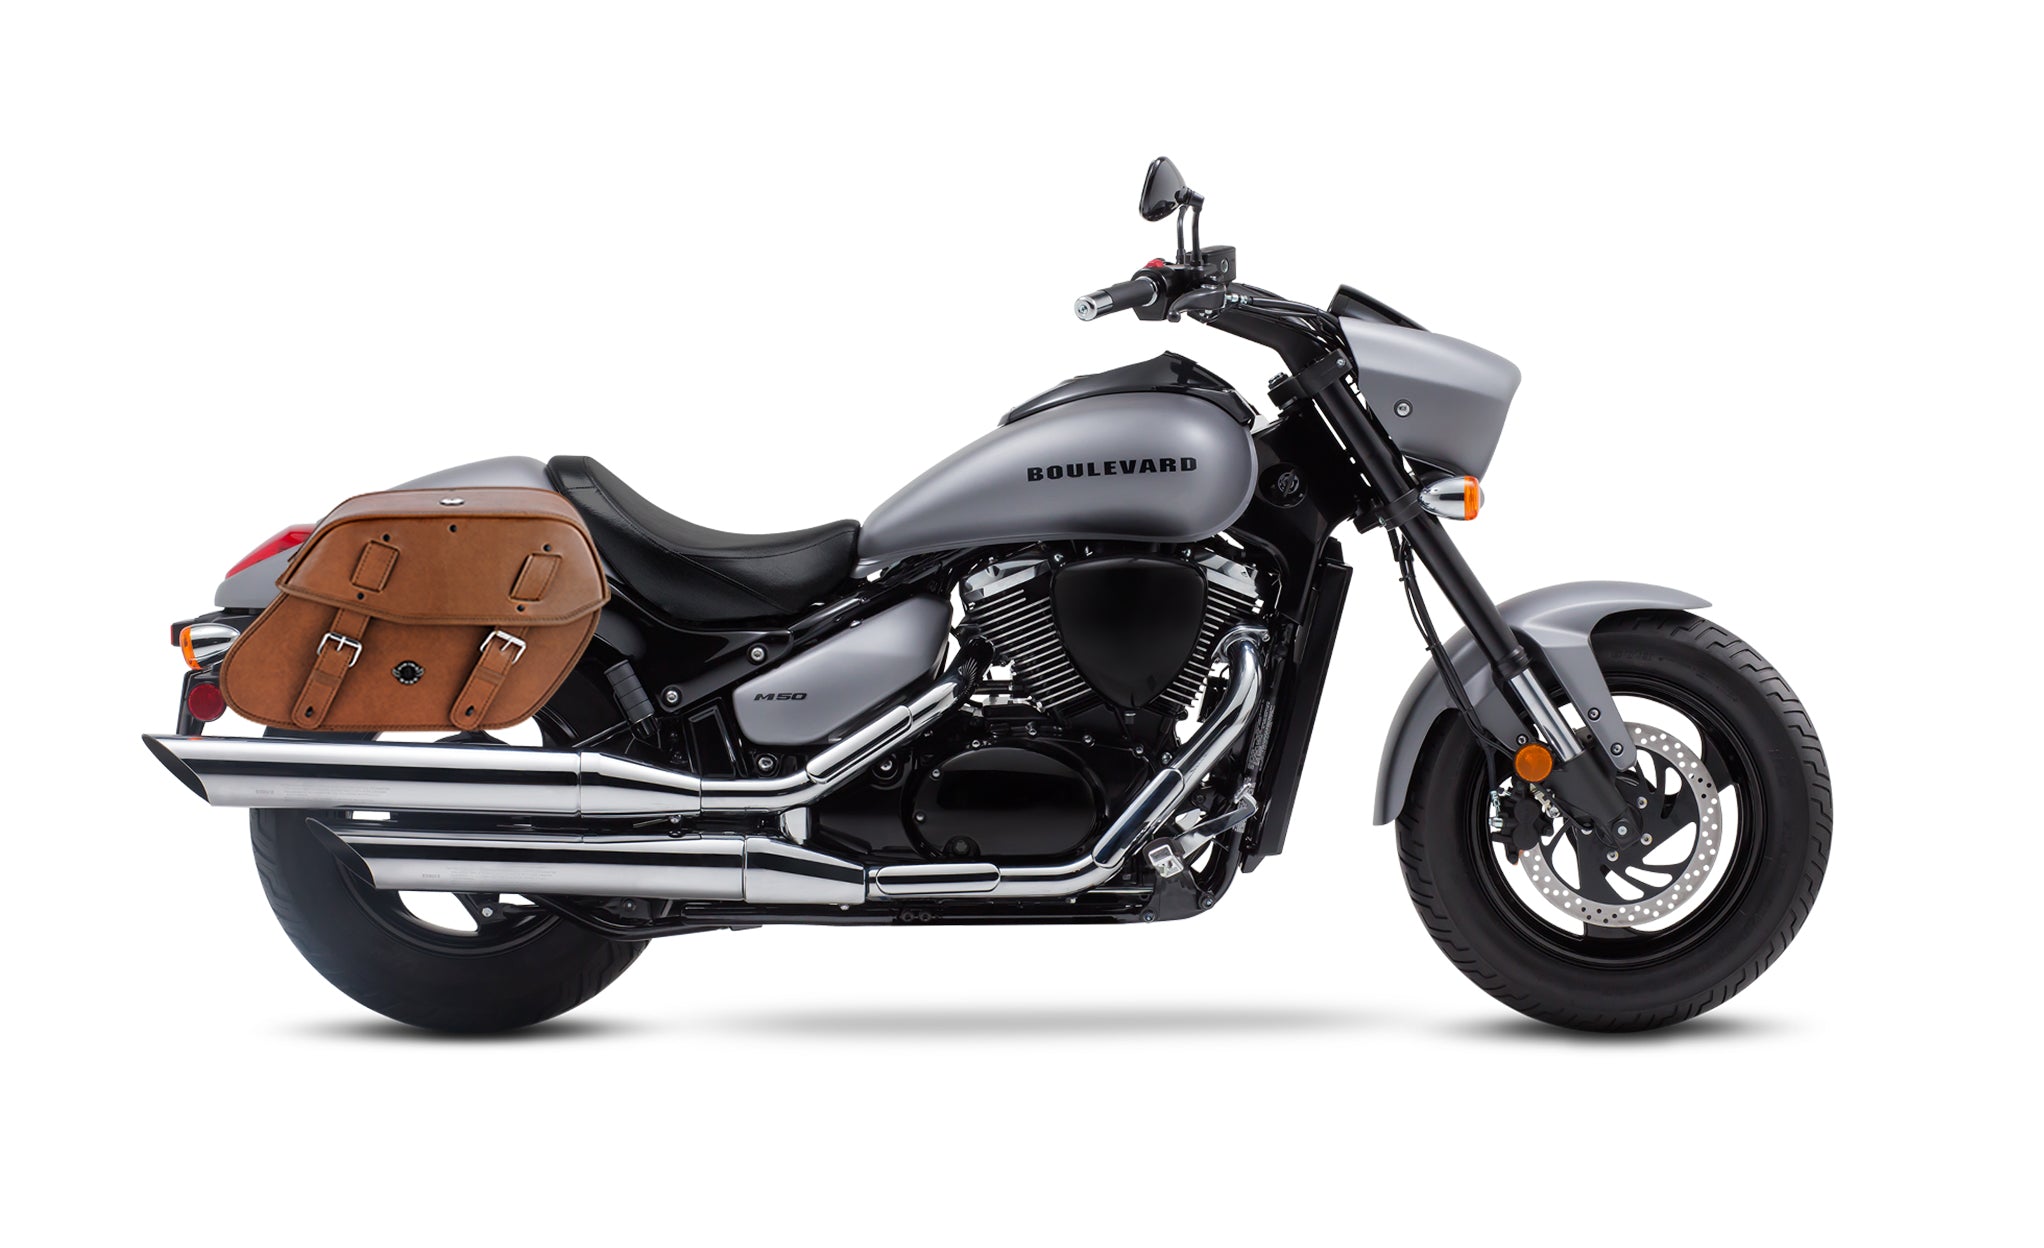 Viking Odin Brown Large Suzuki Boulevard M50 Vz800 Leather Motorcycle Saddlebags on Bike Photo @expand